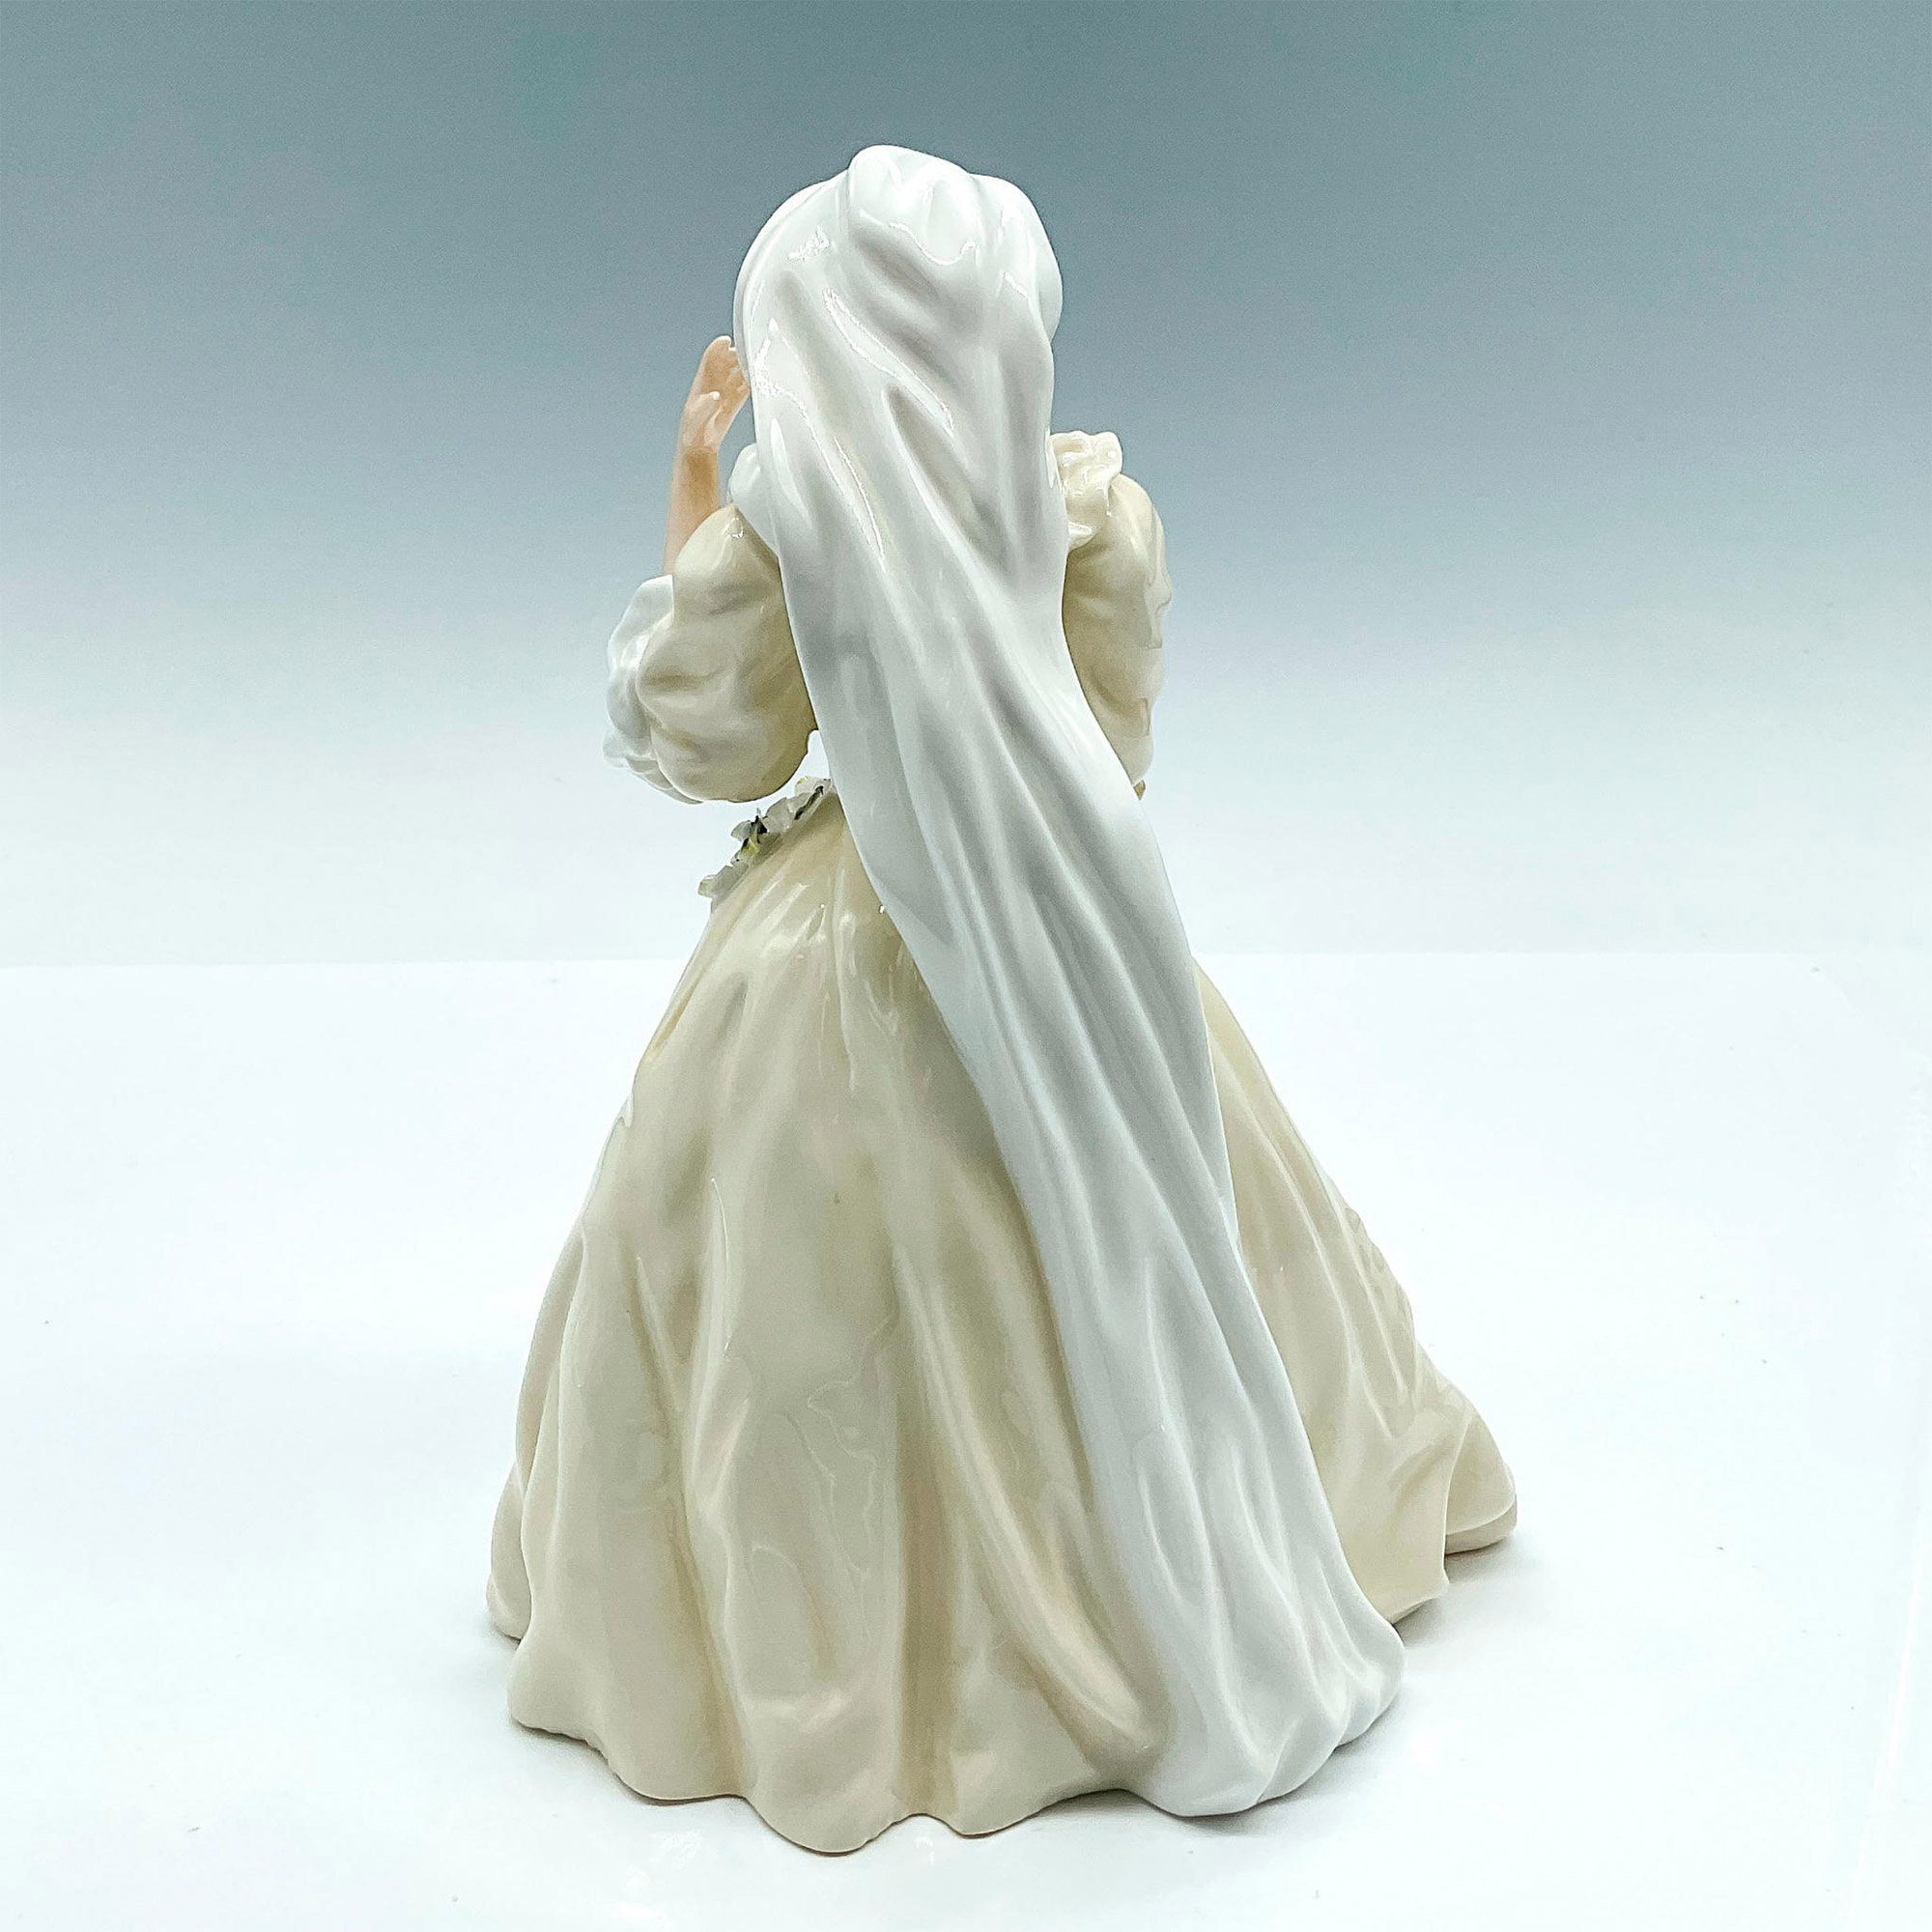 Princess of Wales - HN2887 - Royal Doulton Figurine - Image 2 of 3